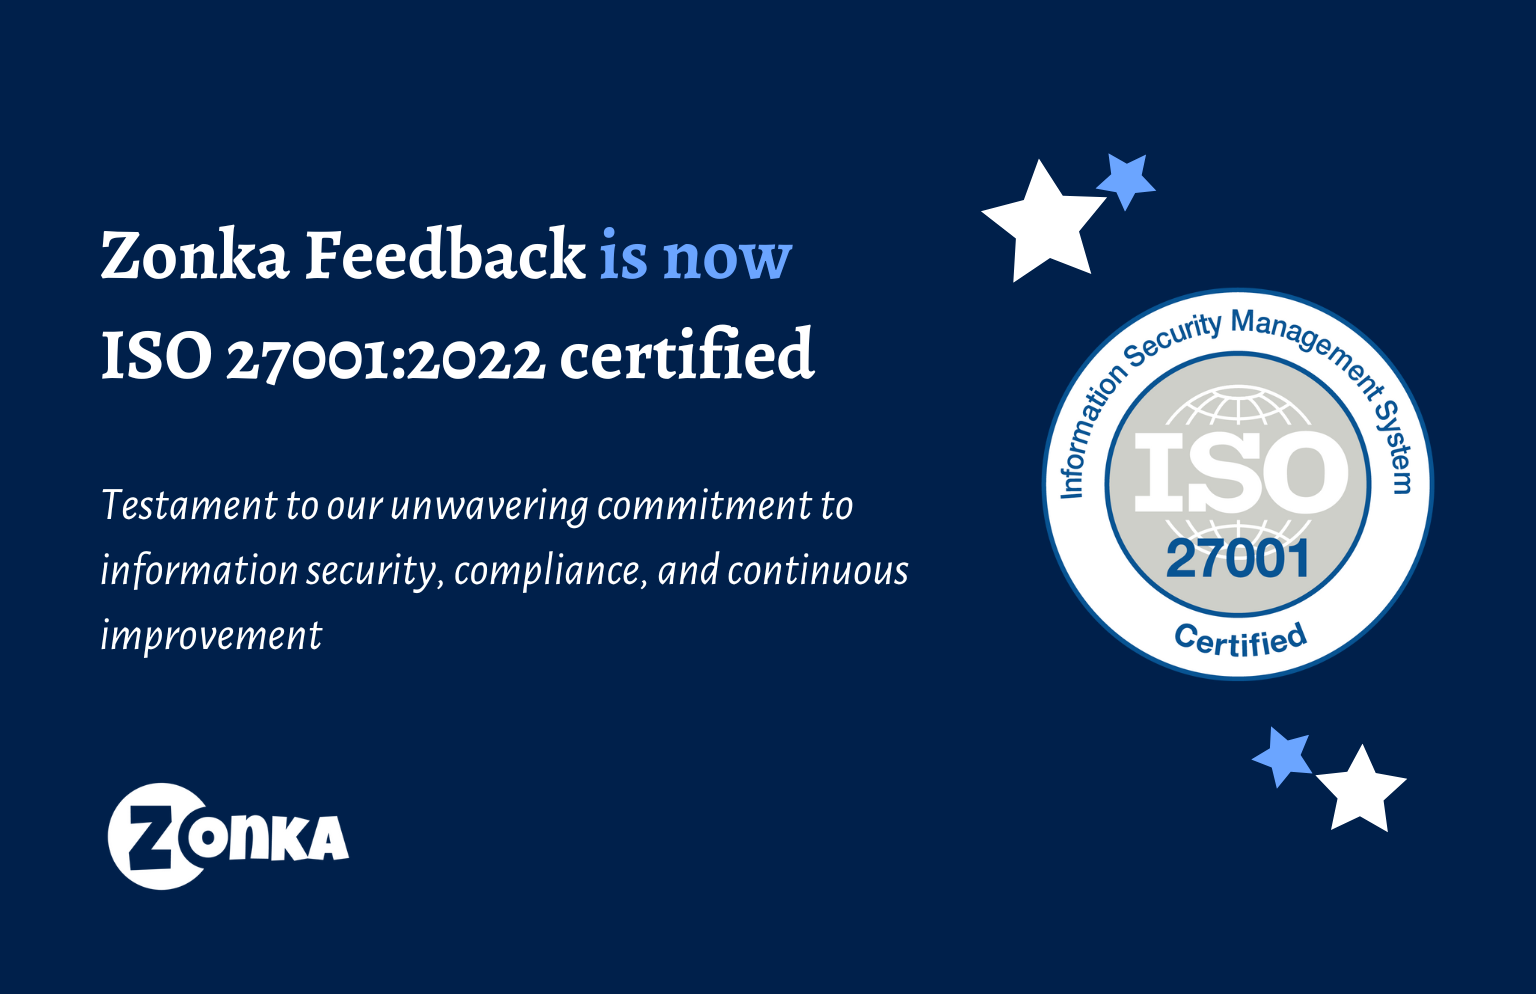 Transform Product Feedback & Customer Service with the new Zonka Feedback